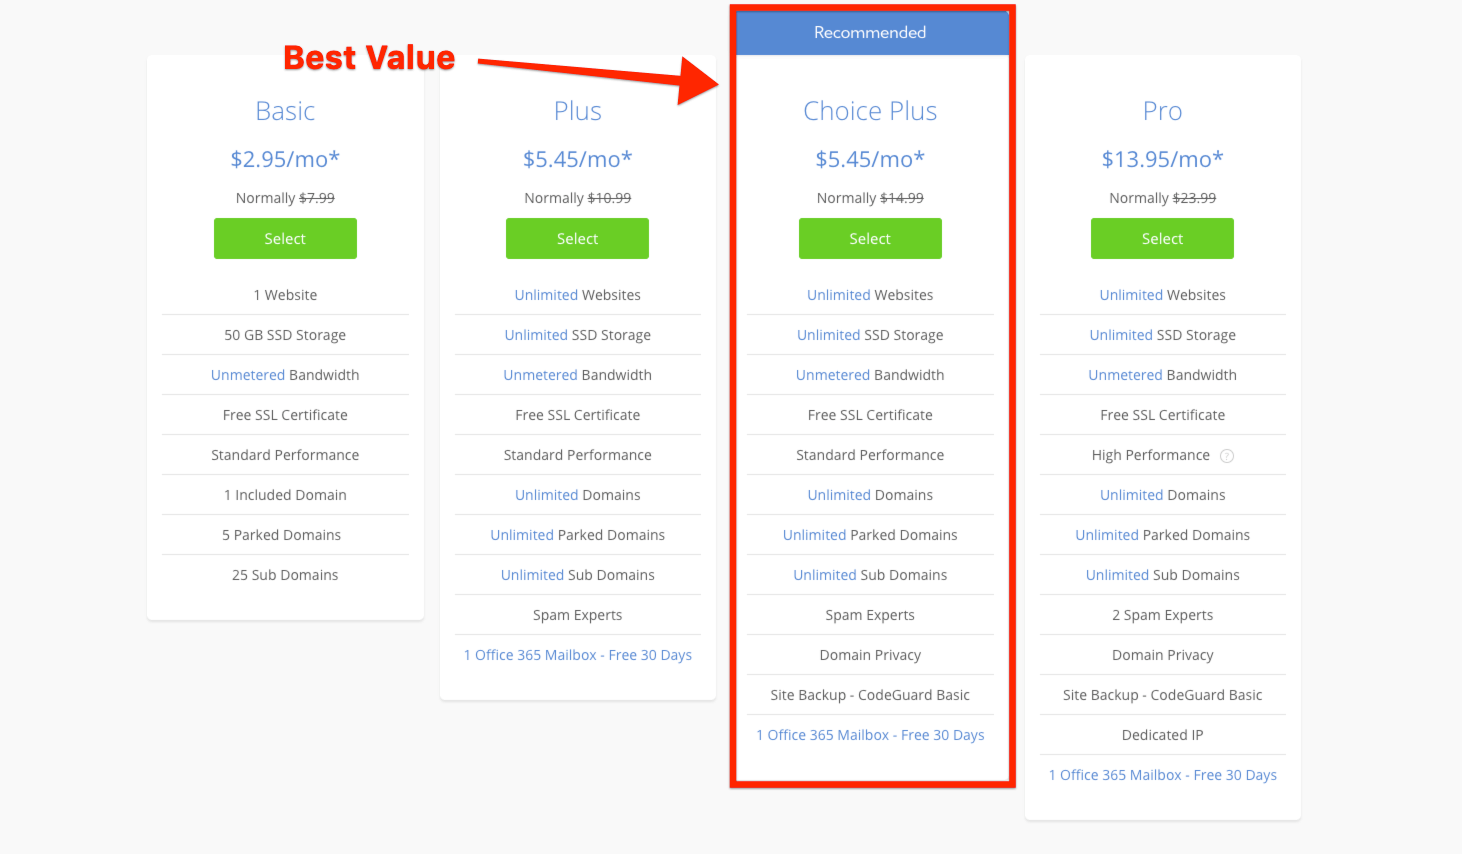 Pick your plan - best value